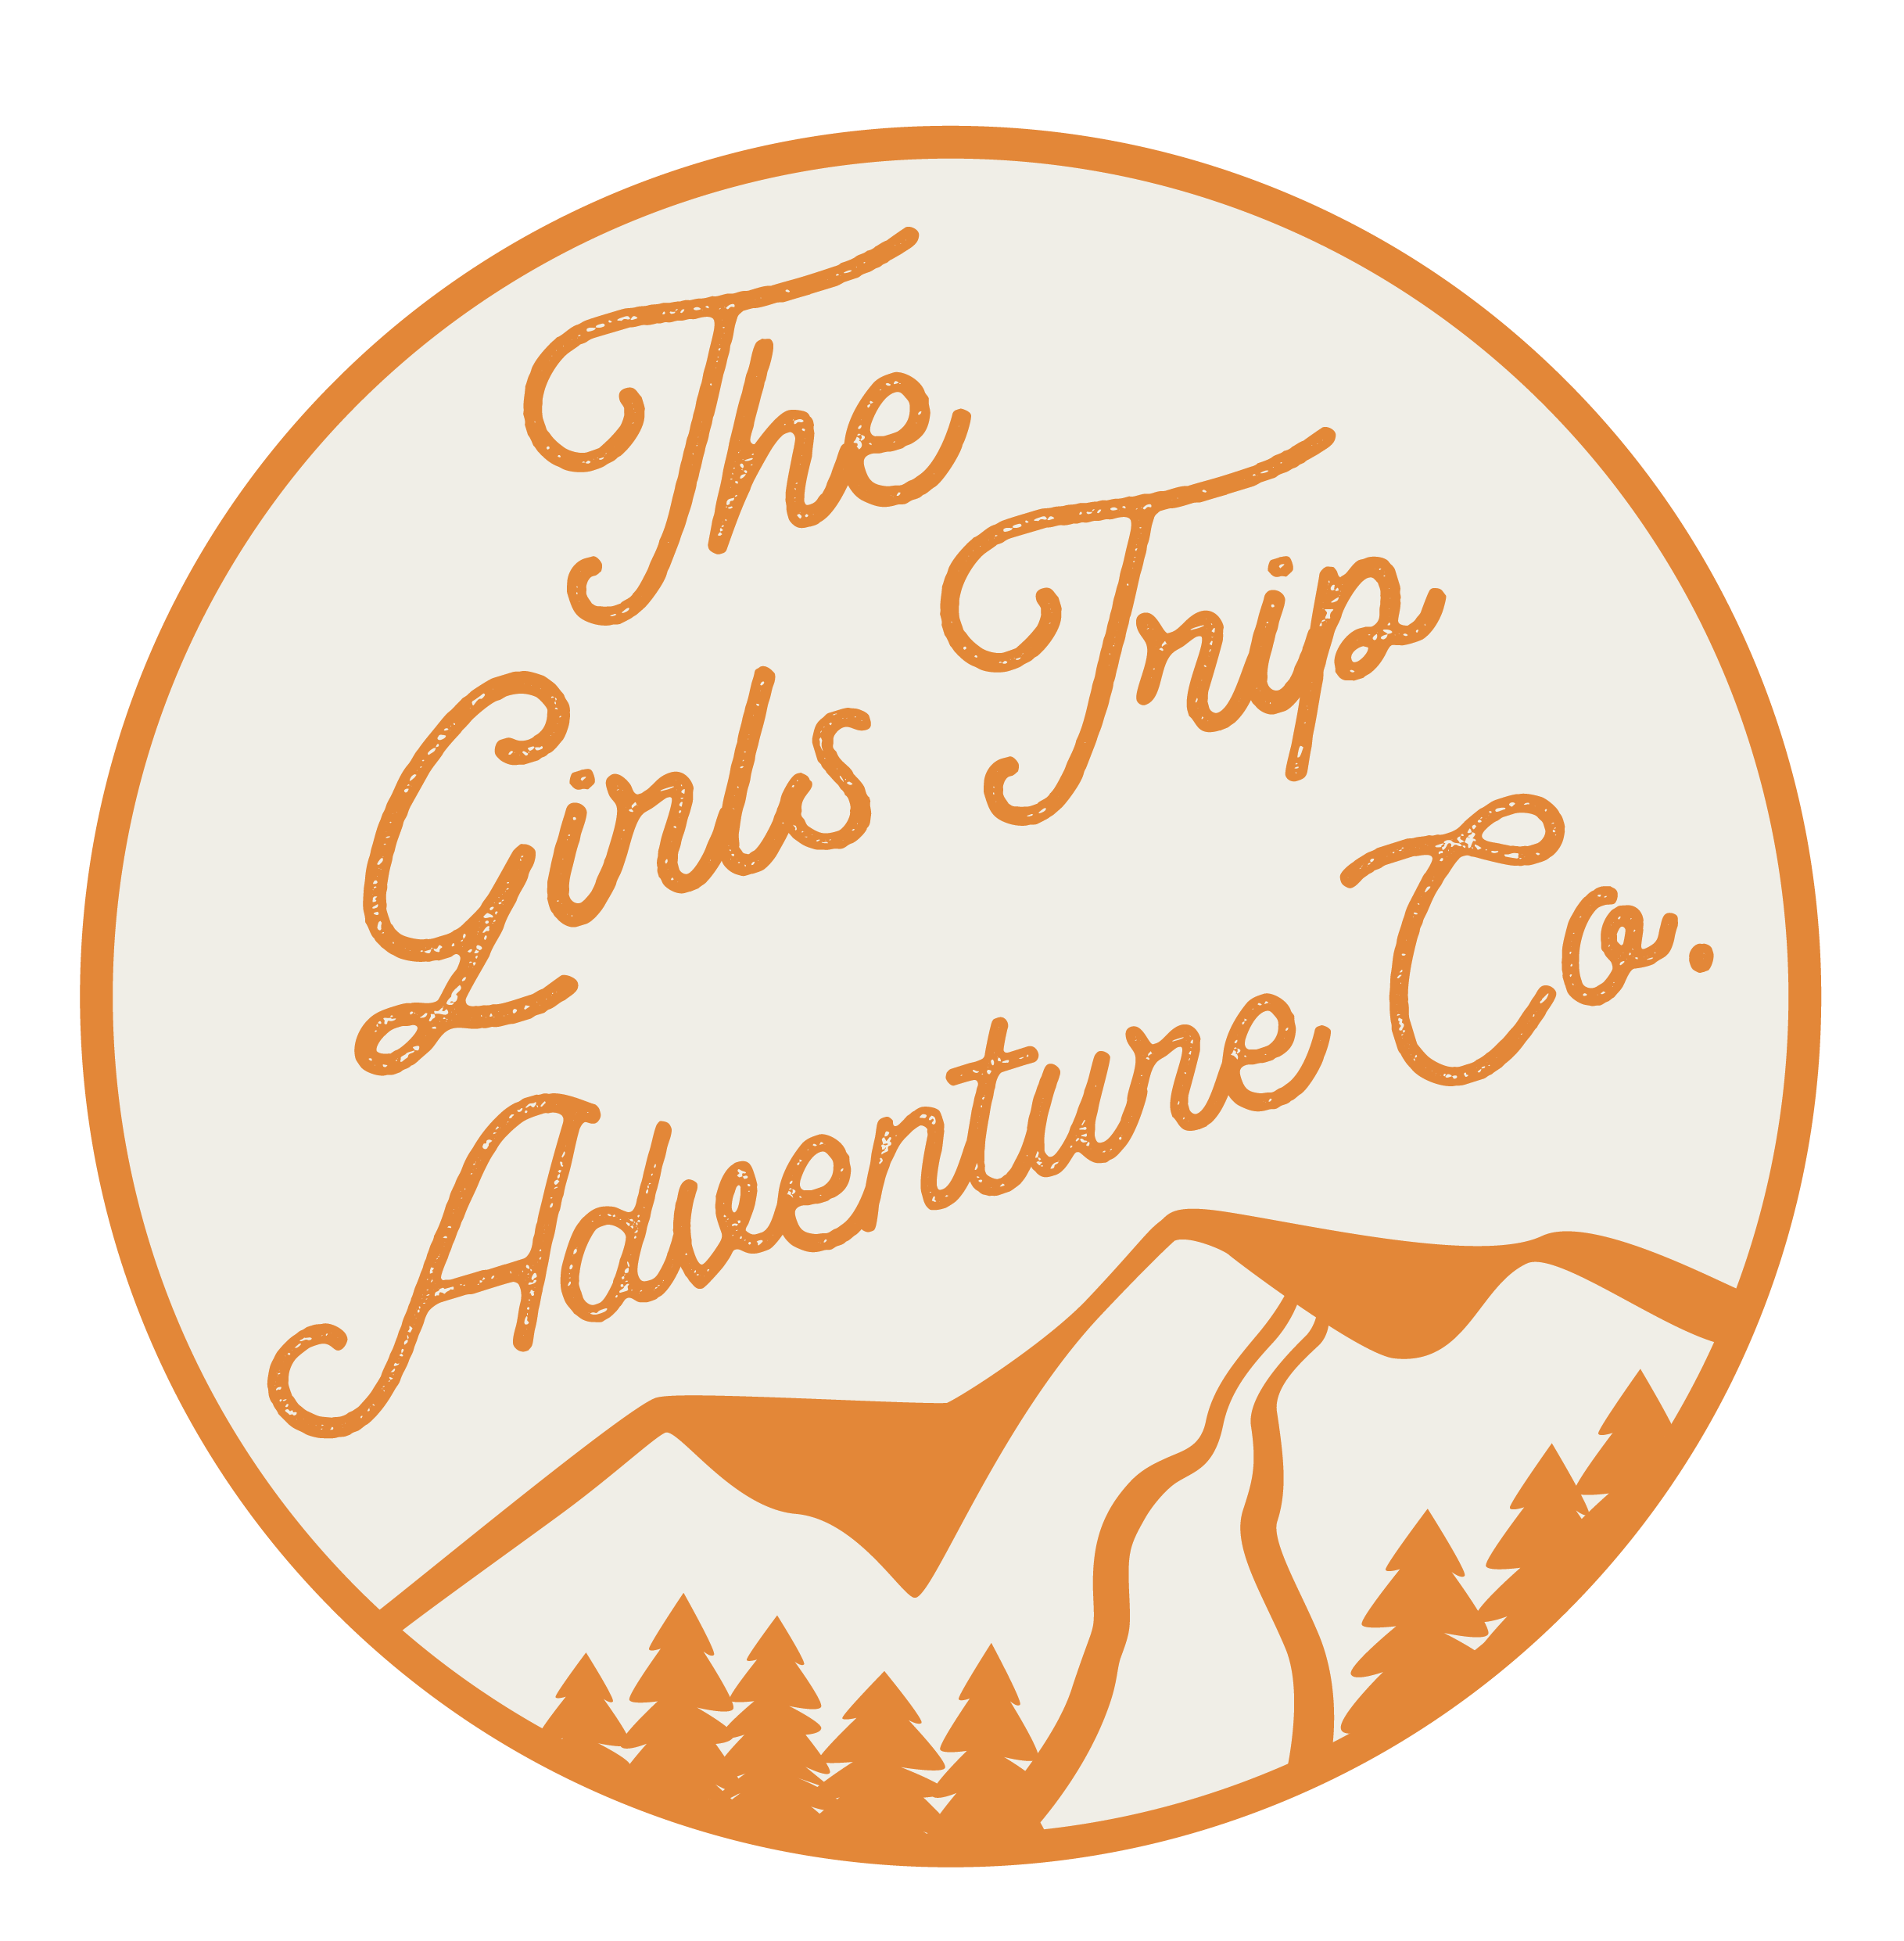 The Girls Trip Adventure Co.